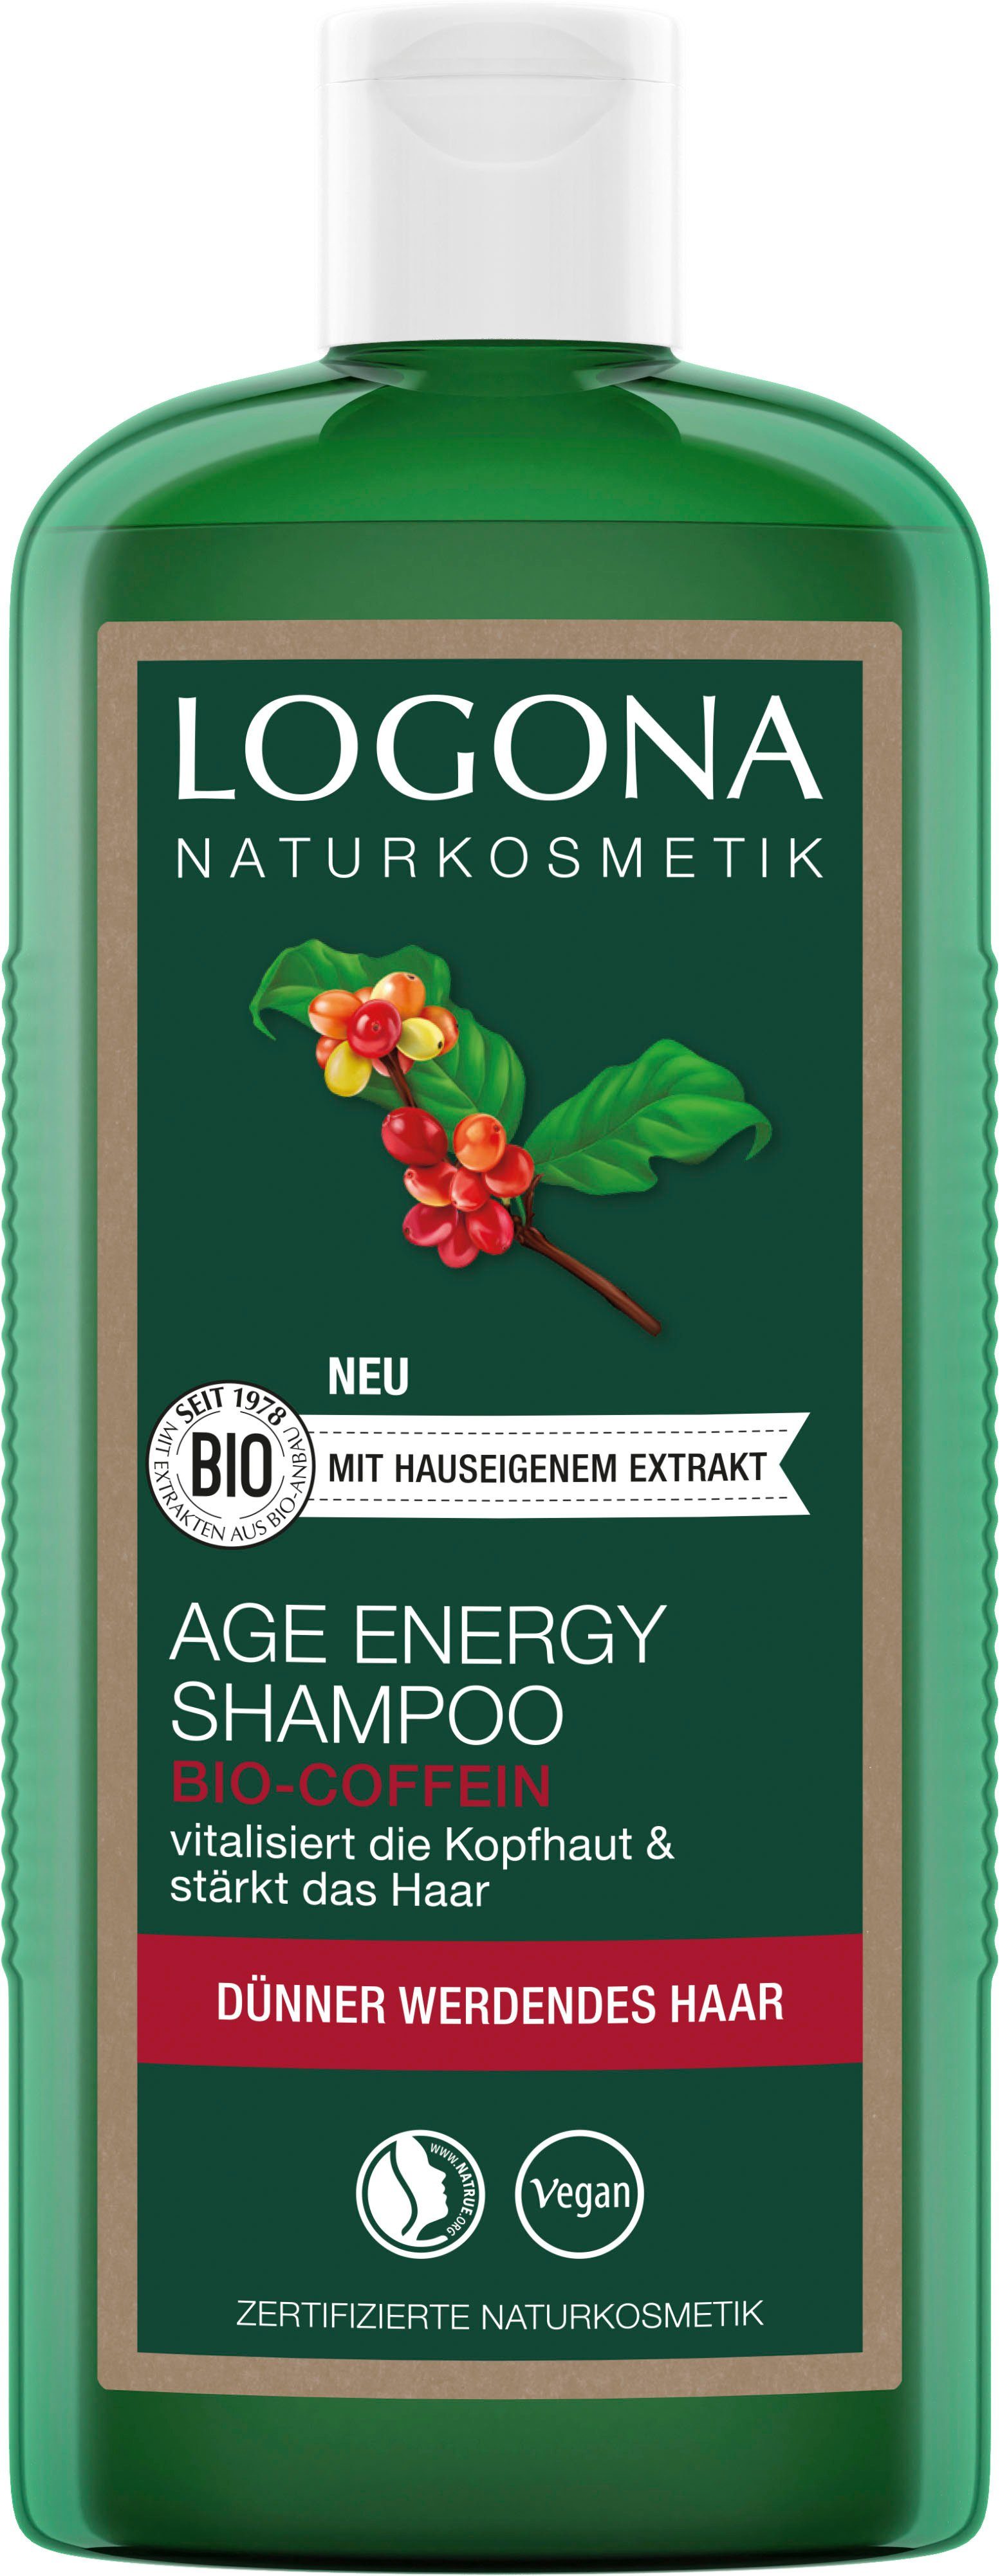 Neue Arbeit LOGONA Haarshampoo Logona Age Energy Shampoo Bio-Coffein